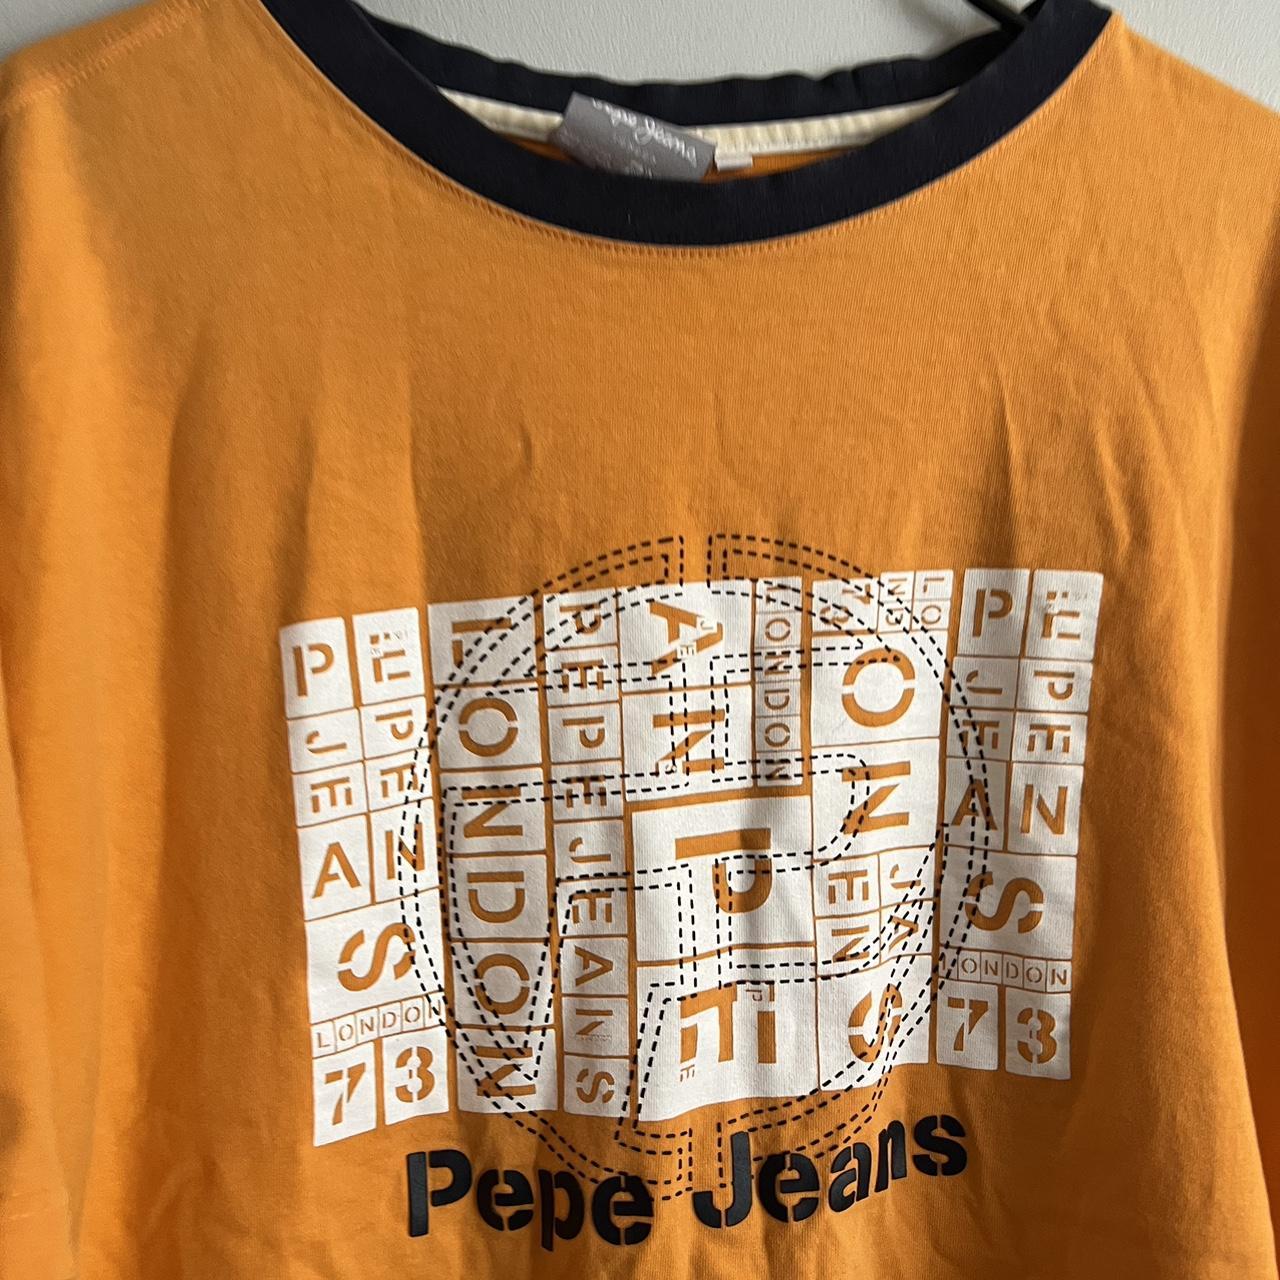 Pepe Jeans Men's Navy and Orange T-shirt (3)